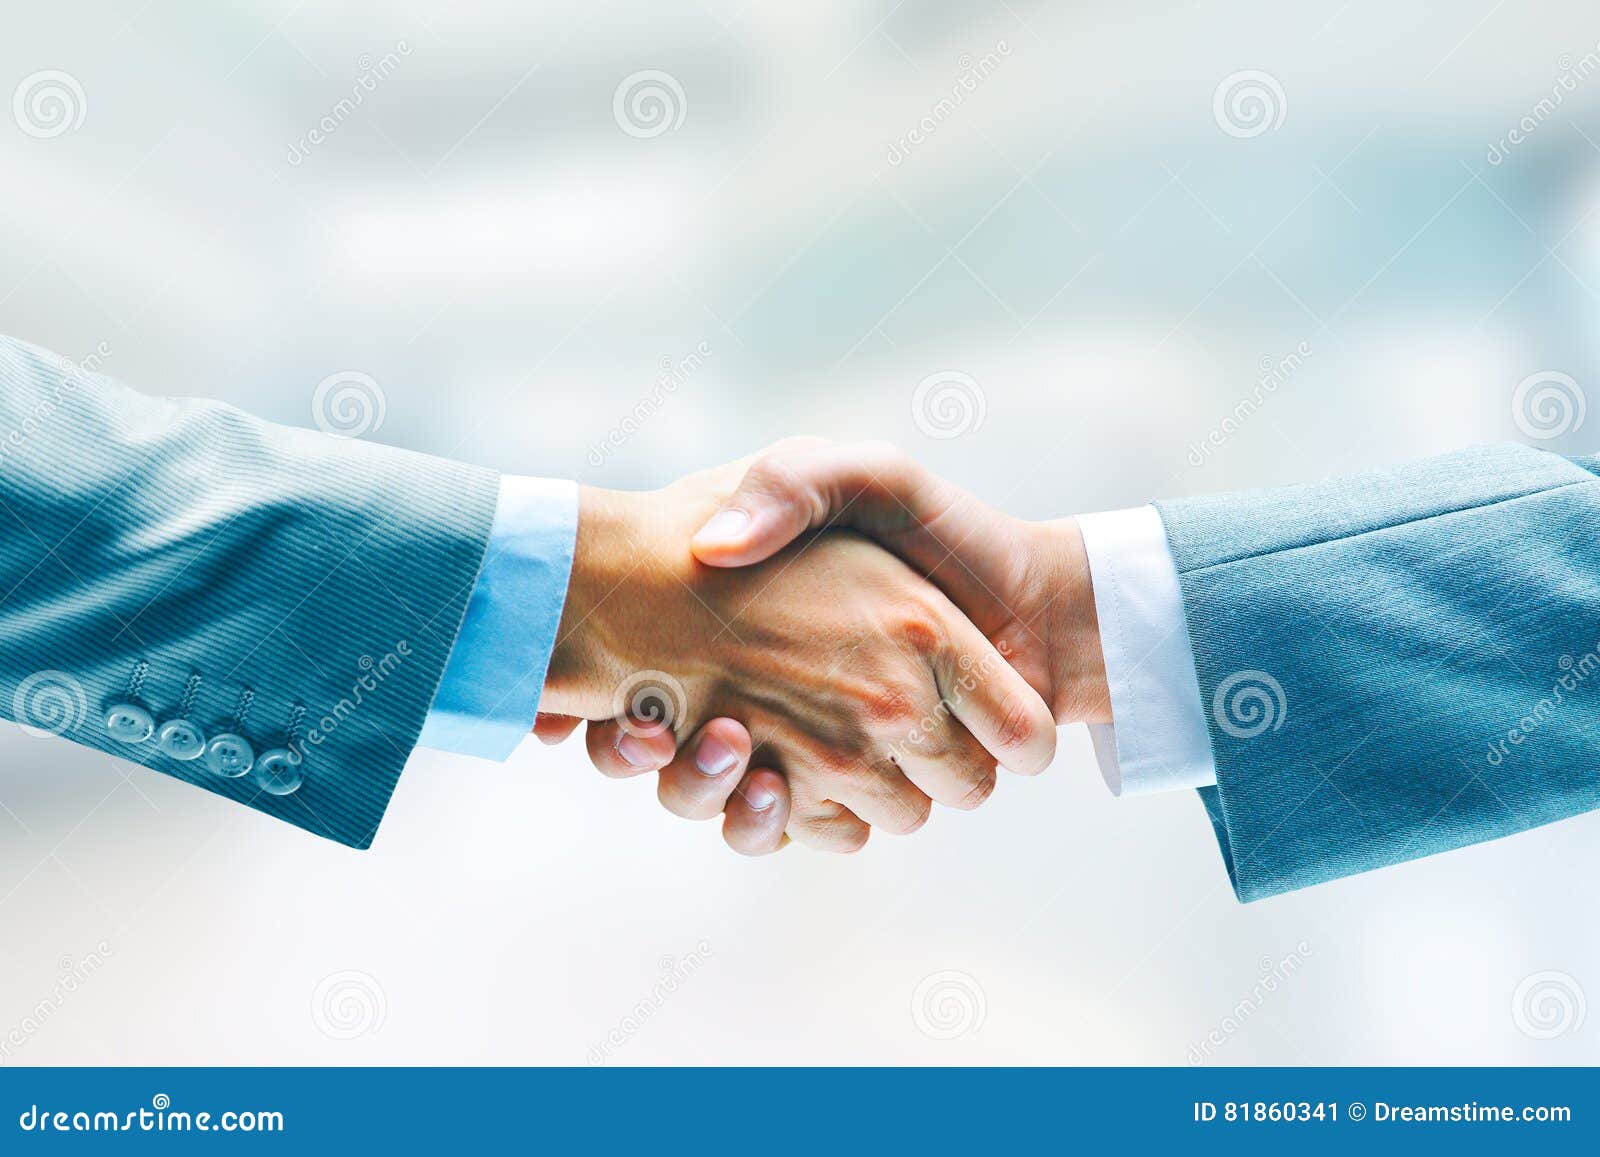 closeup bussines handshake. two men shaking hands. success. agreement